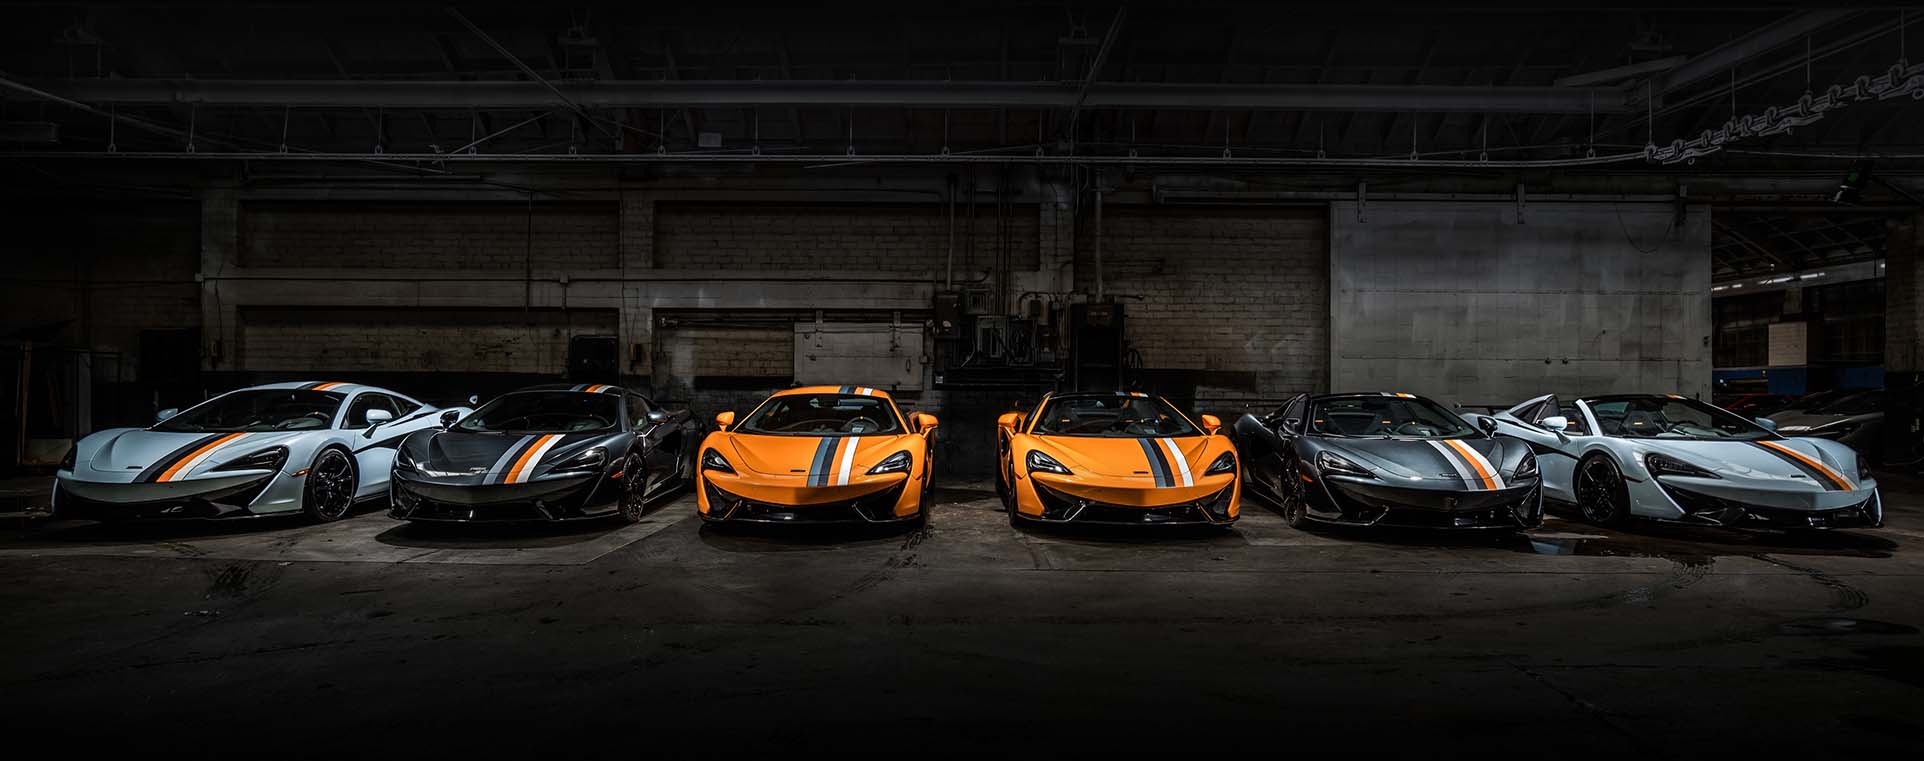 Garage of parked McLarens